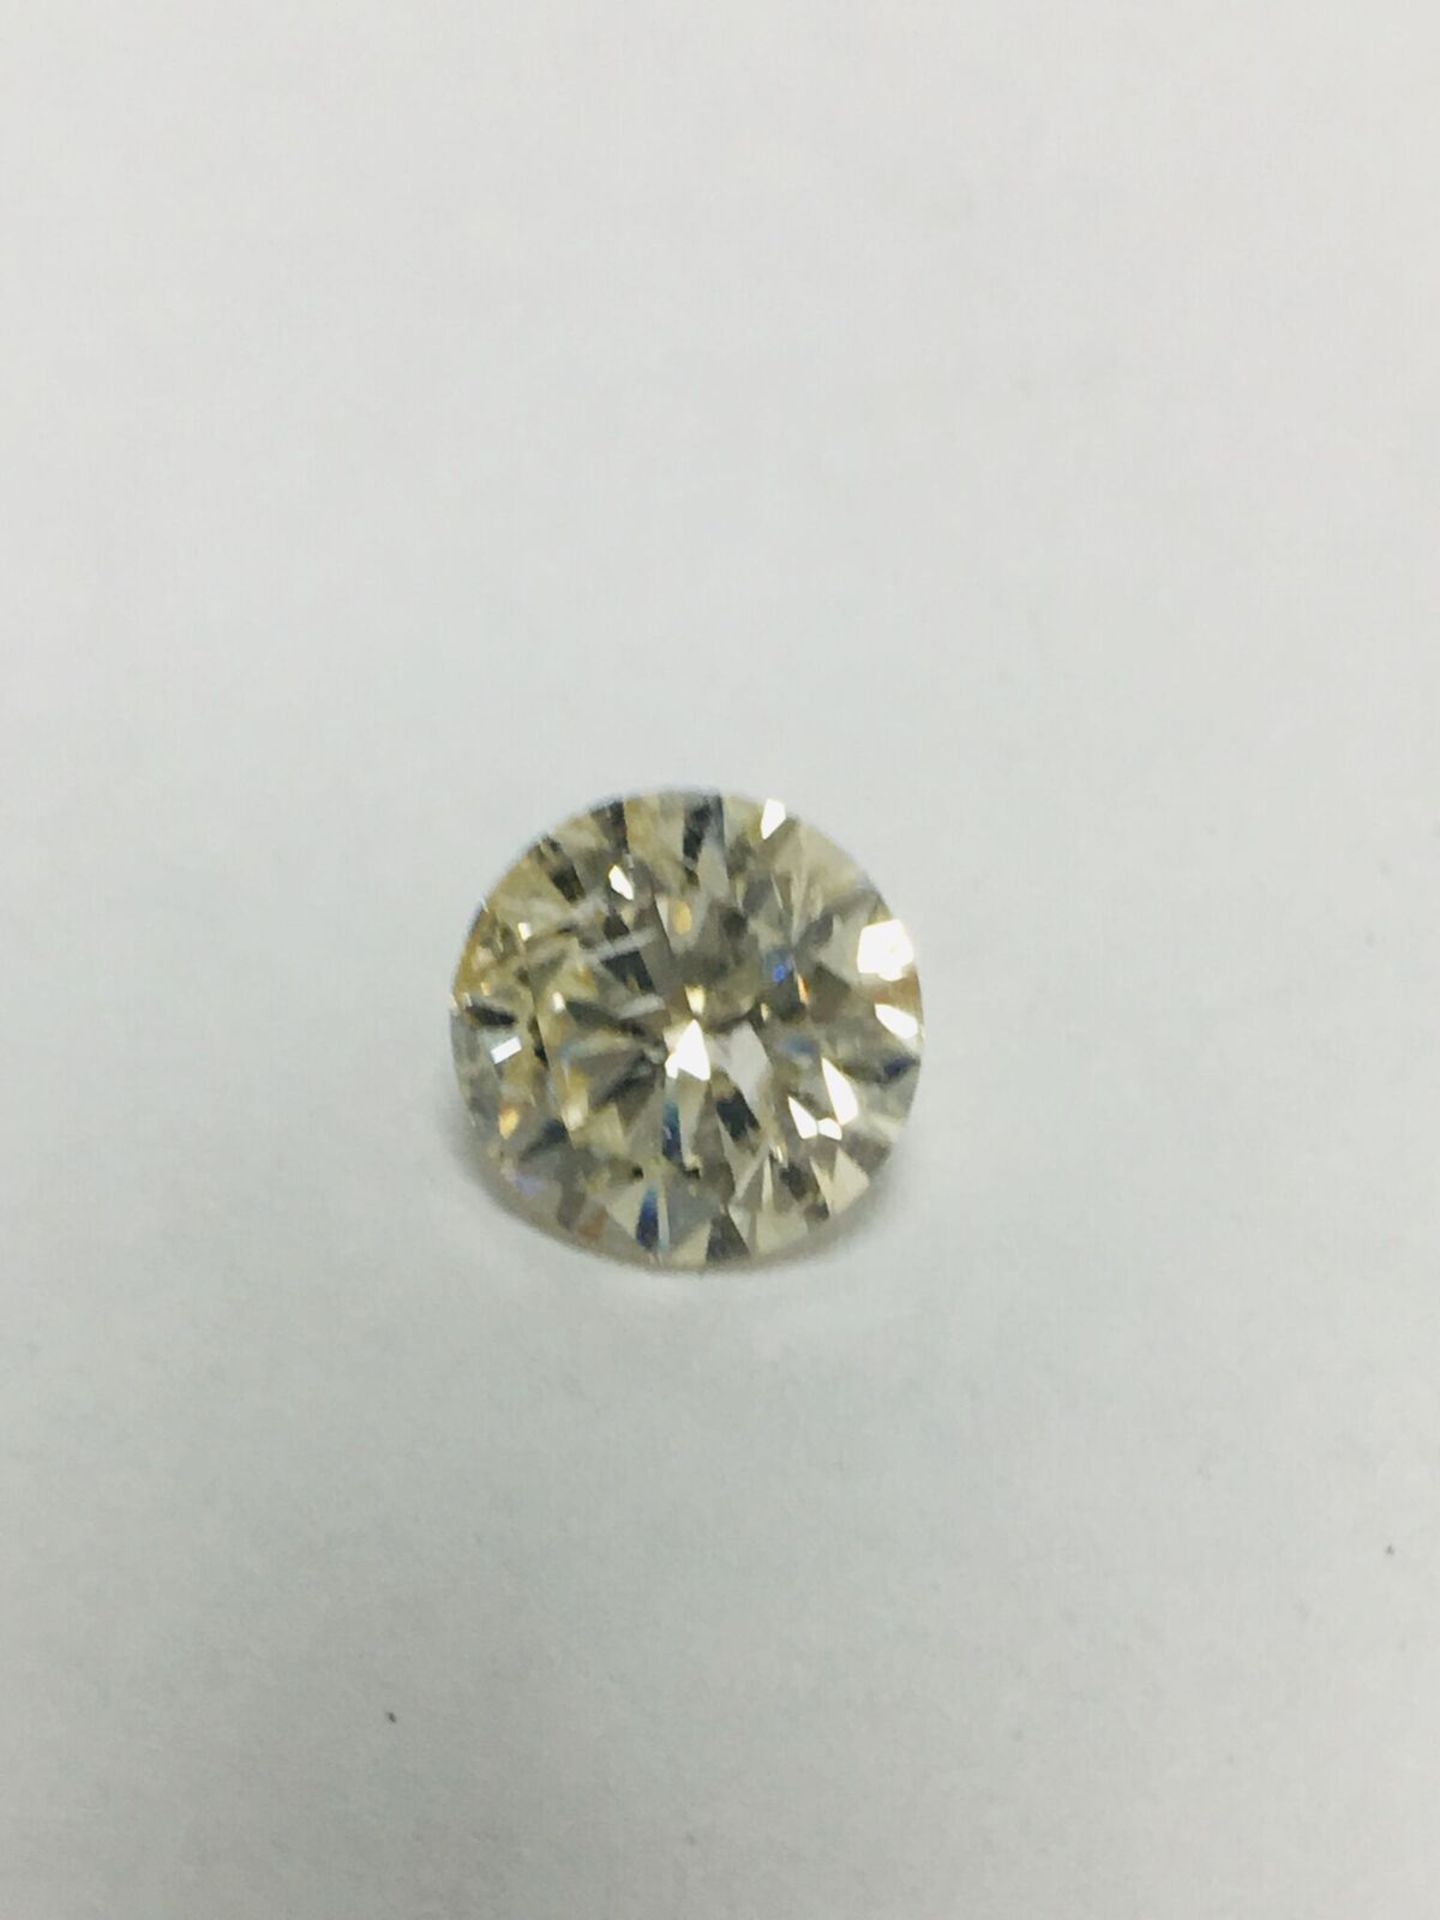 1.55Ct Natural Brilliant Cut Diamond, si2 Clarity - Image 4 of 5